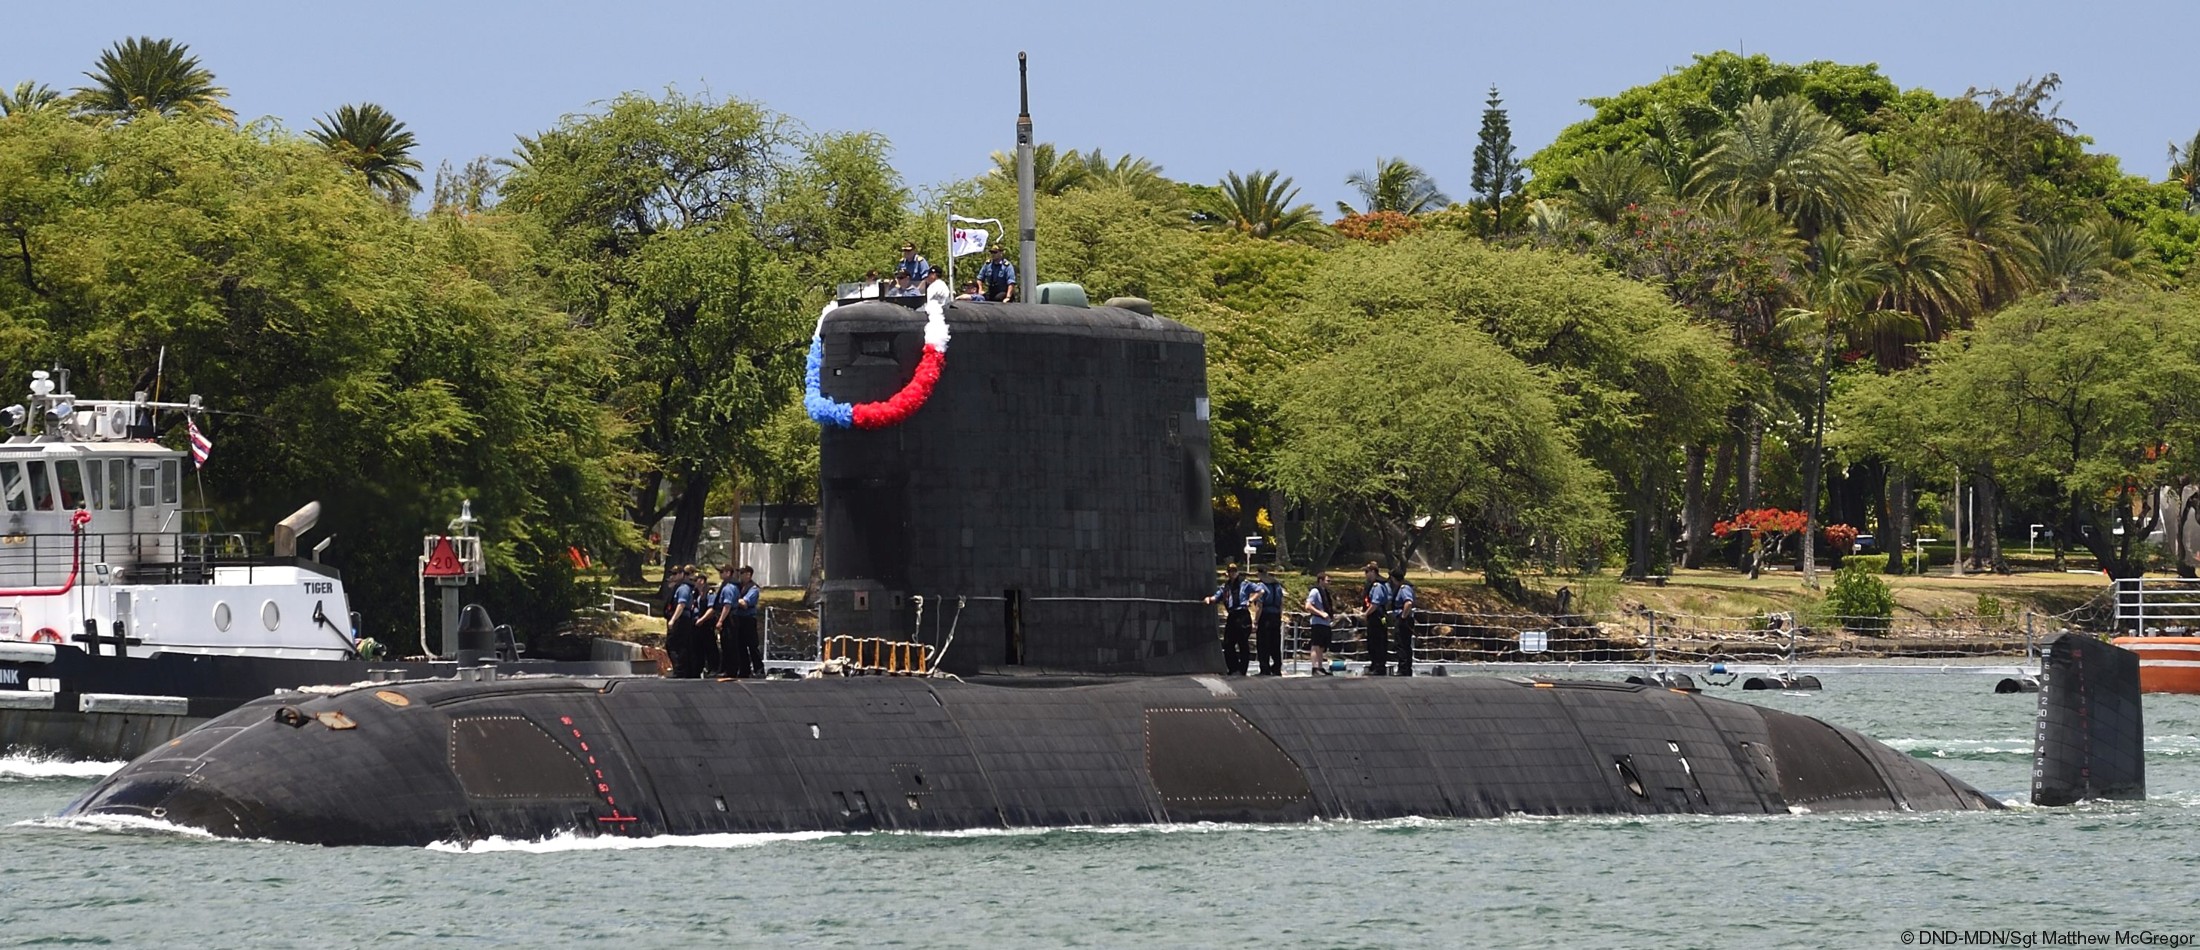 ssk-876 hmcs victoria upholder class attack submarine hunter killer ncsm royal canadian navy 13 rimpac hawaii